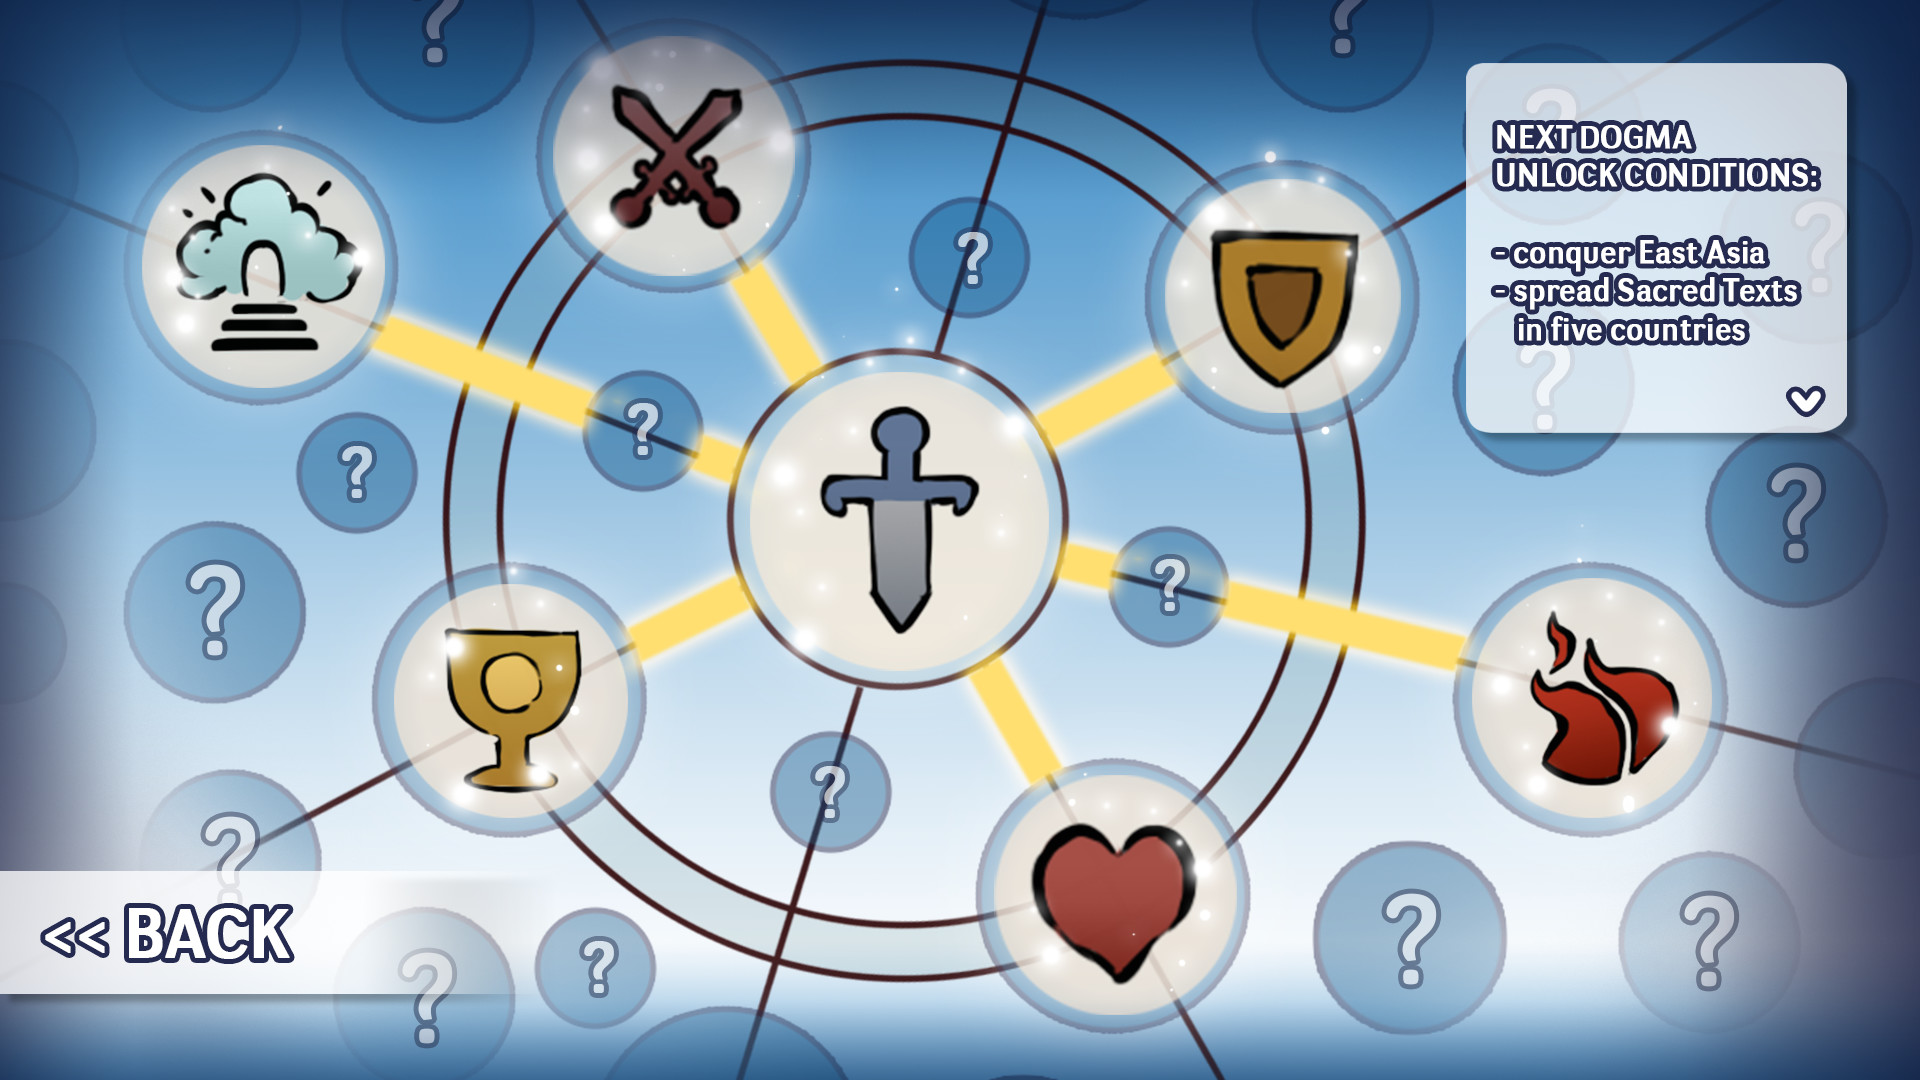 Theology - Religion Creator screenshot